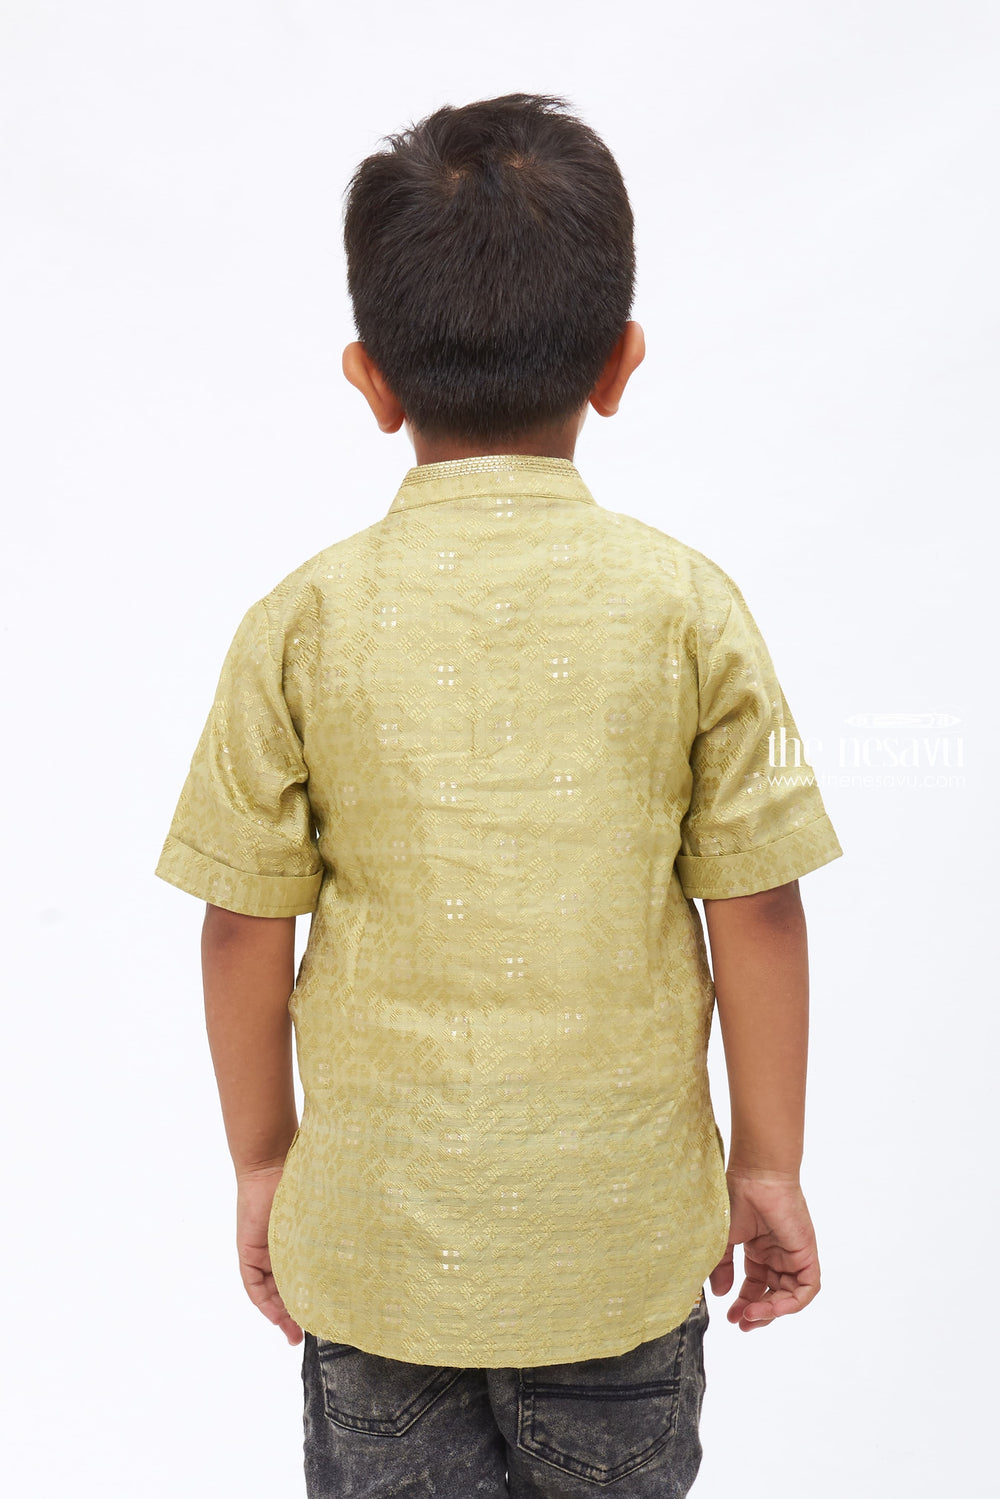 The Nesavu Boys Kurtha Shirt Boys Green Geometric Print Traditional Kurta Shirt Nesavu Traditional Shirt for Boys | Boys Stylish Shirt Online | The Nesavu